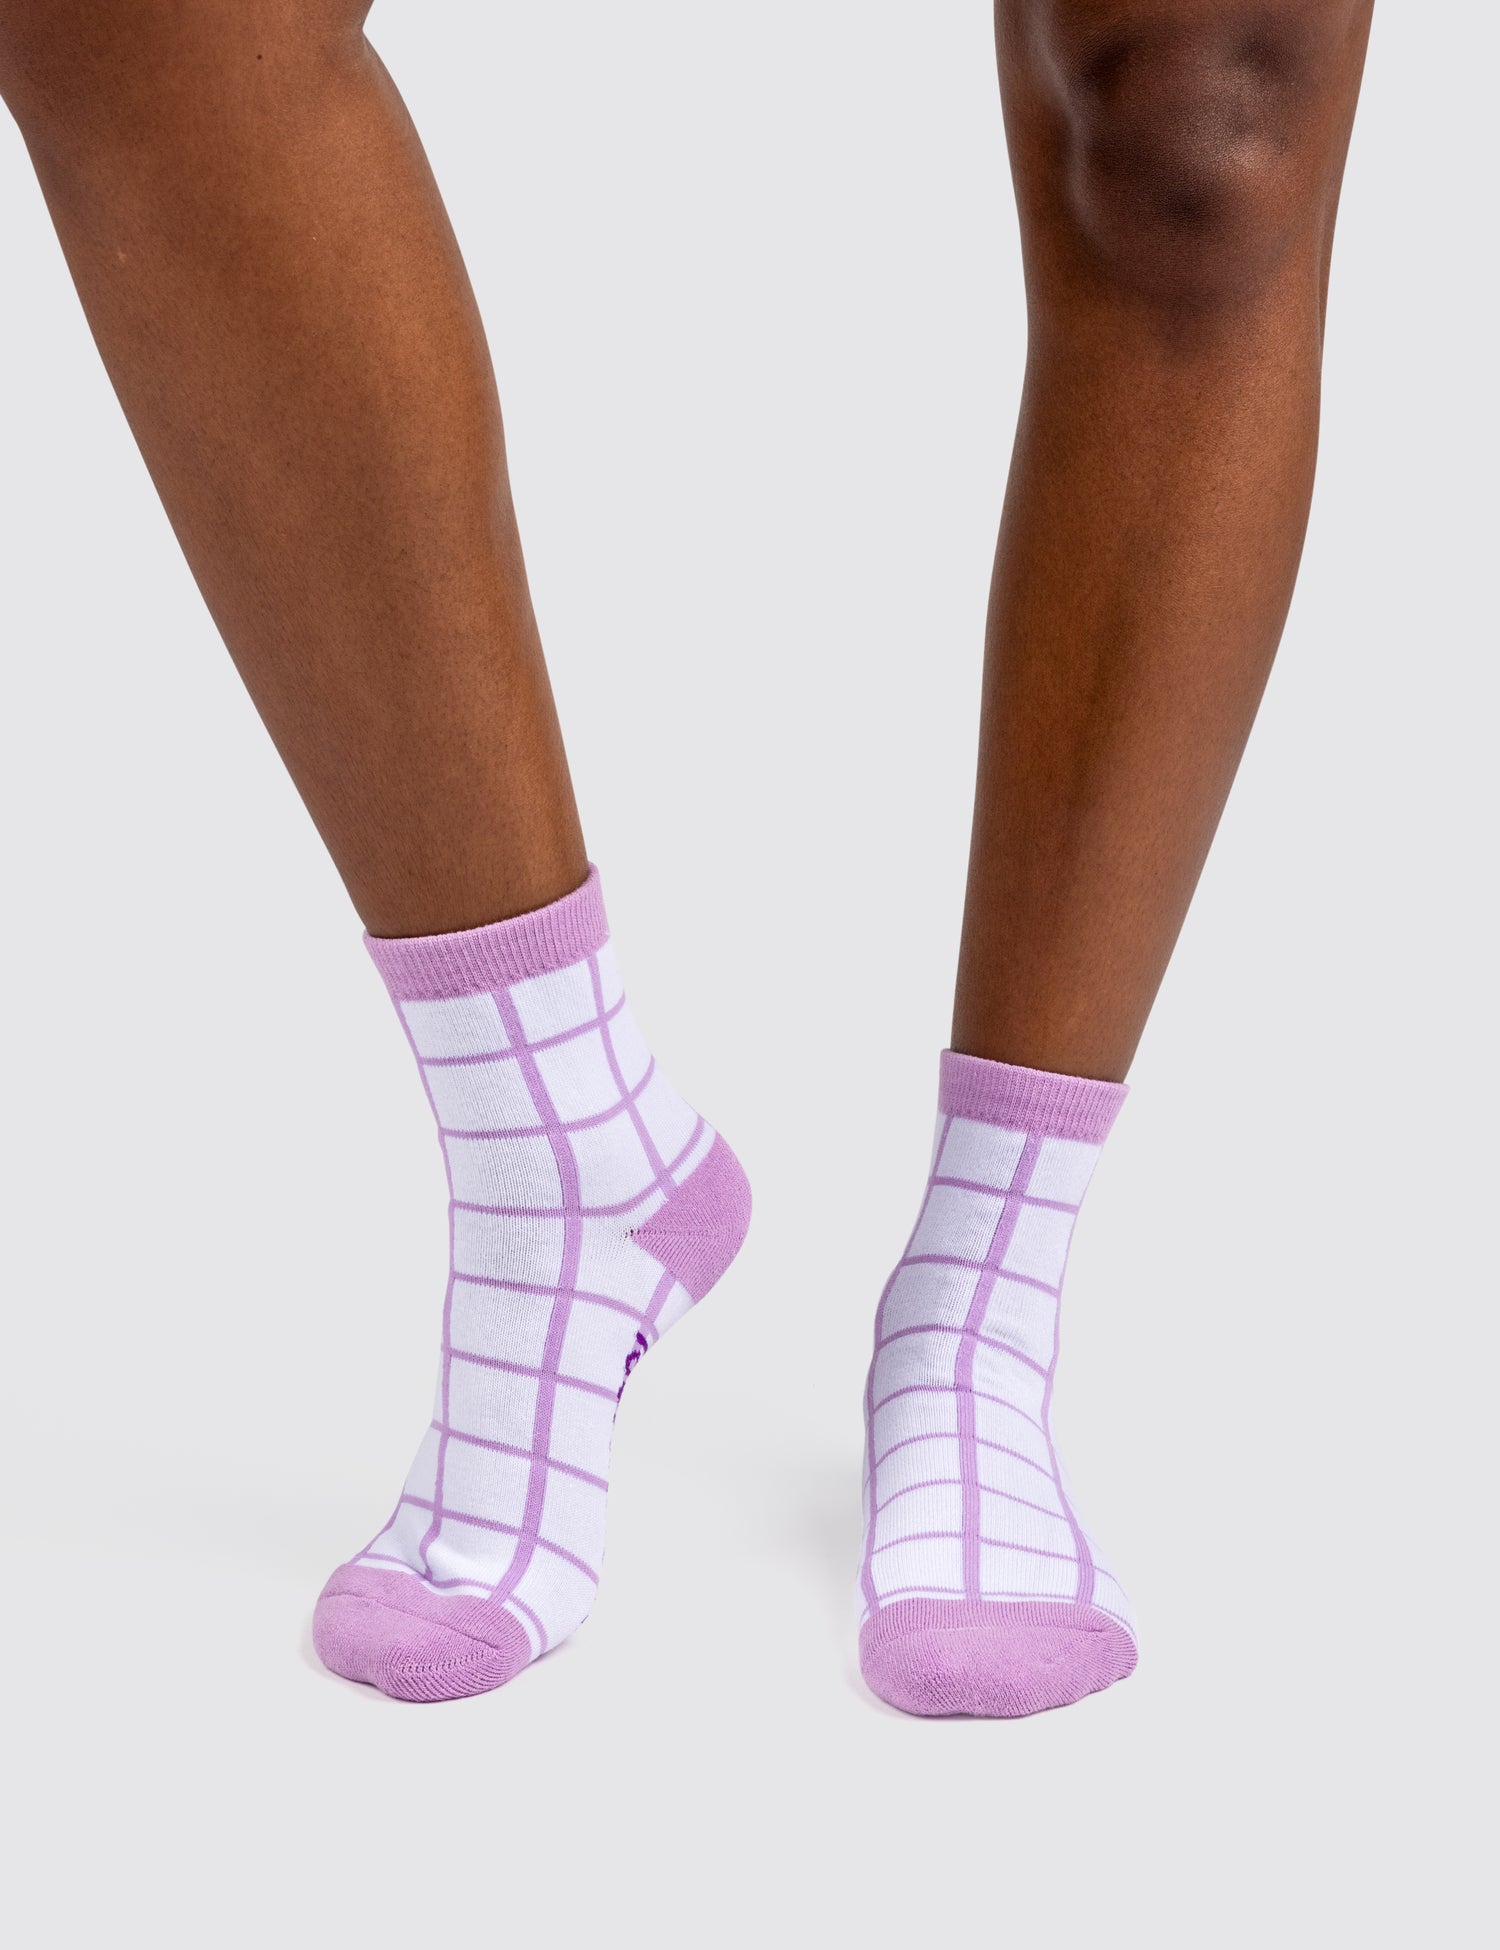 Majesty Grid Socks